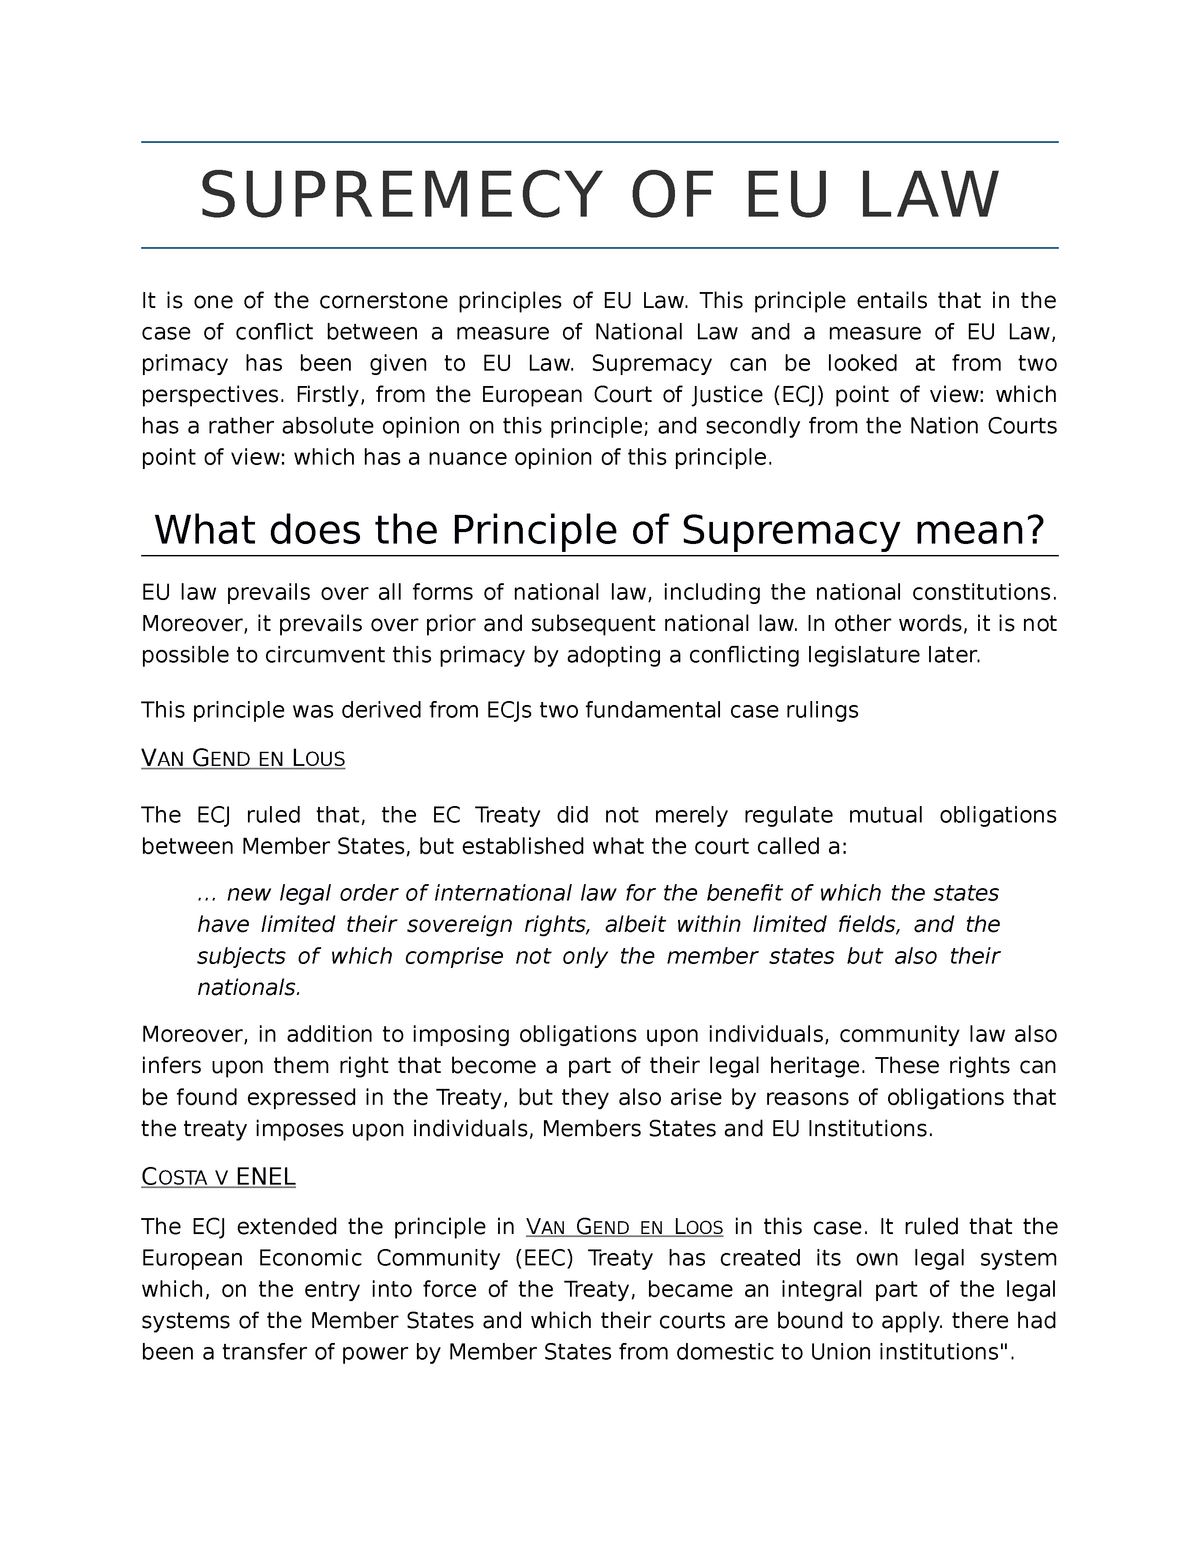 eu law supremacy essay